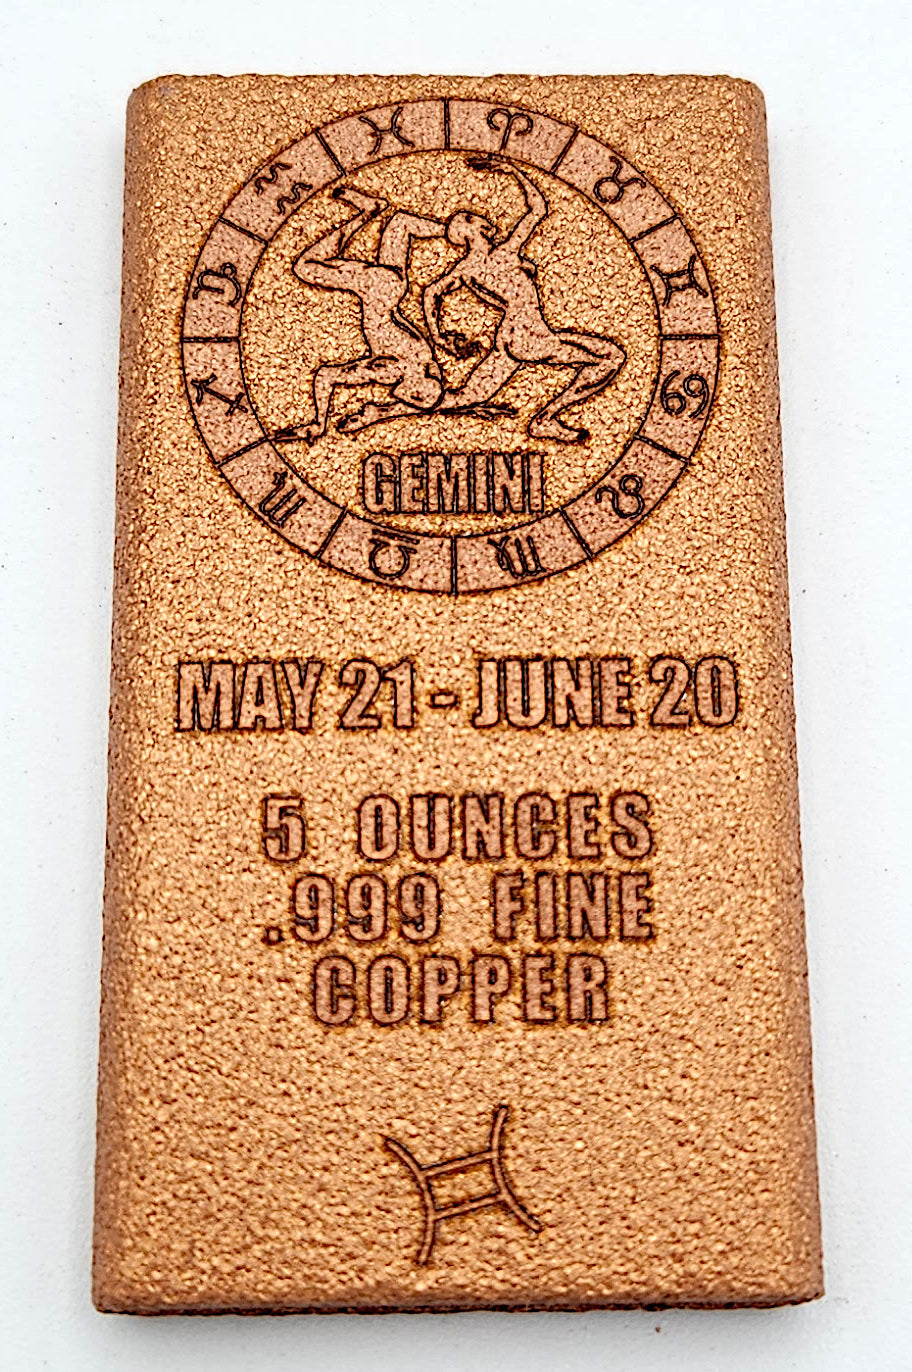 5 oz Copper Bar - Gemini by Liberty Copper